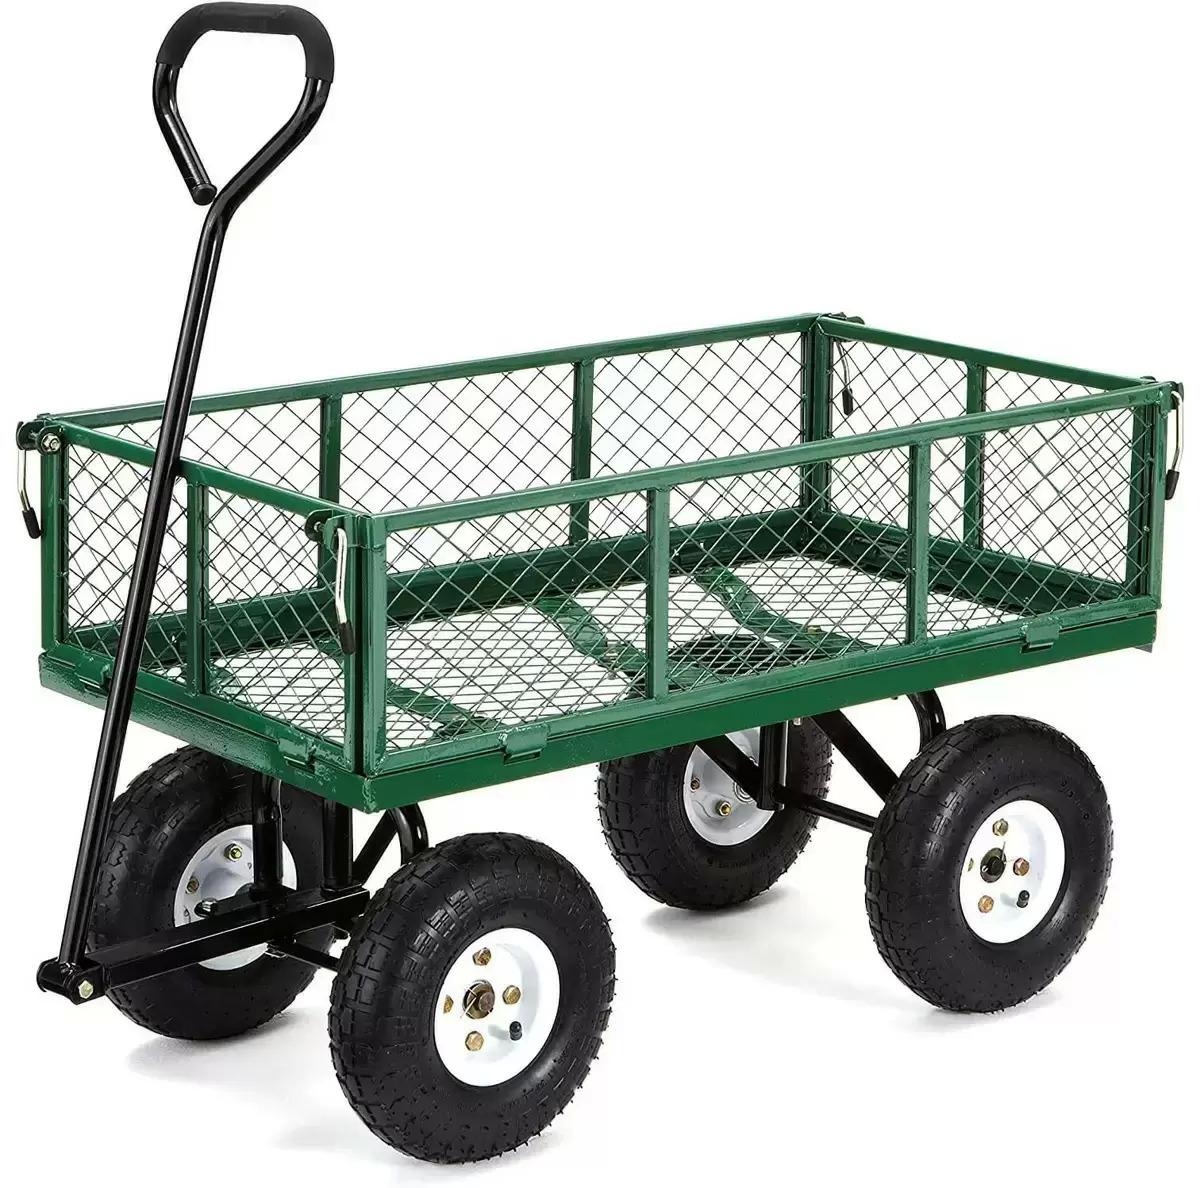 Gorilla Carts Steel Garden Cart for $89 Shipped